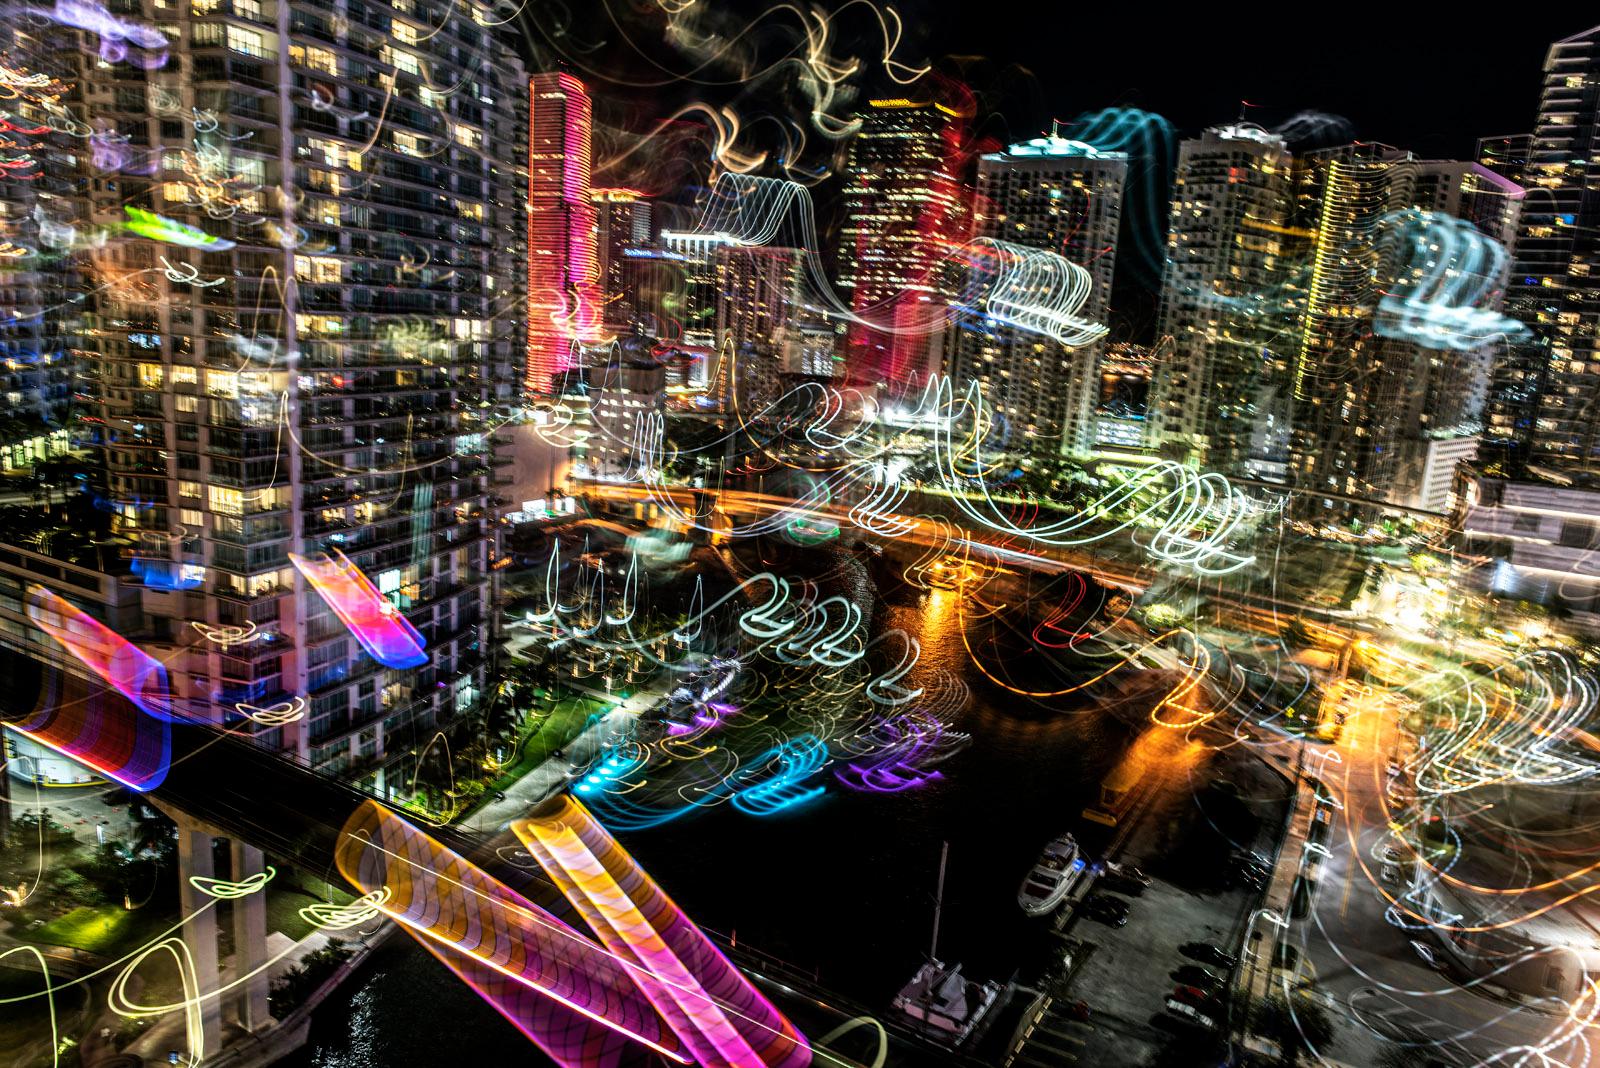 John Mazlish Color Photograph - "Miami Nights"- Surreal Nighttime Photo of Brickell, Miami, Florida